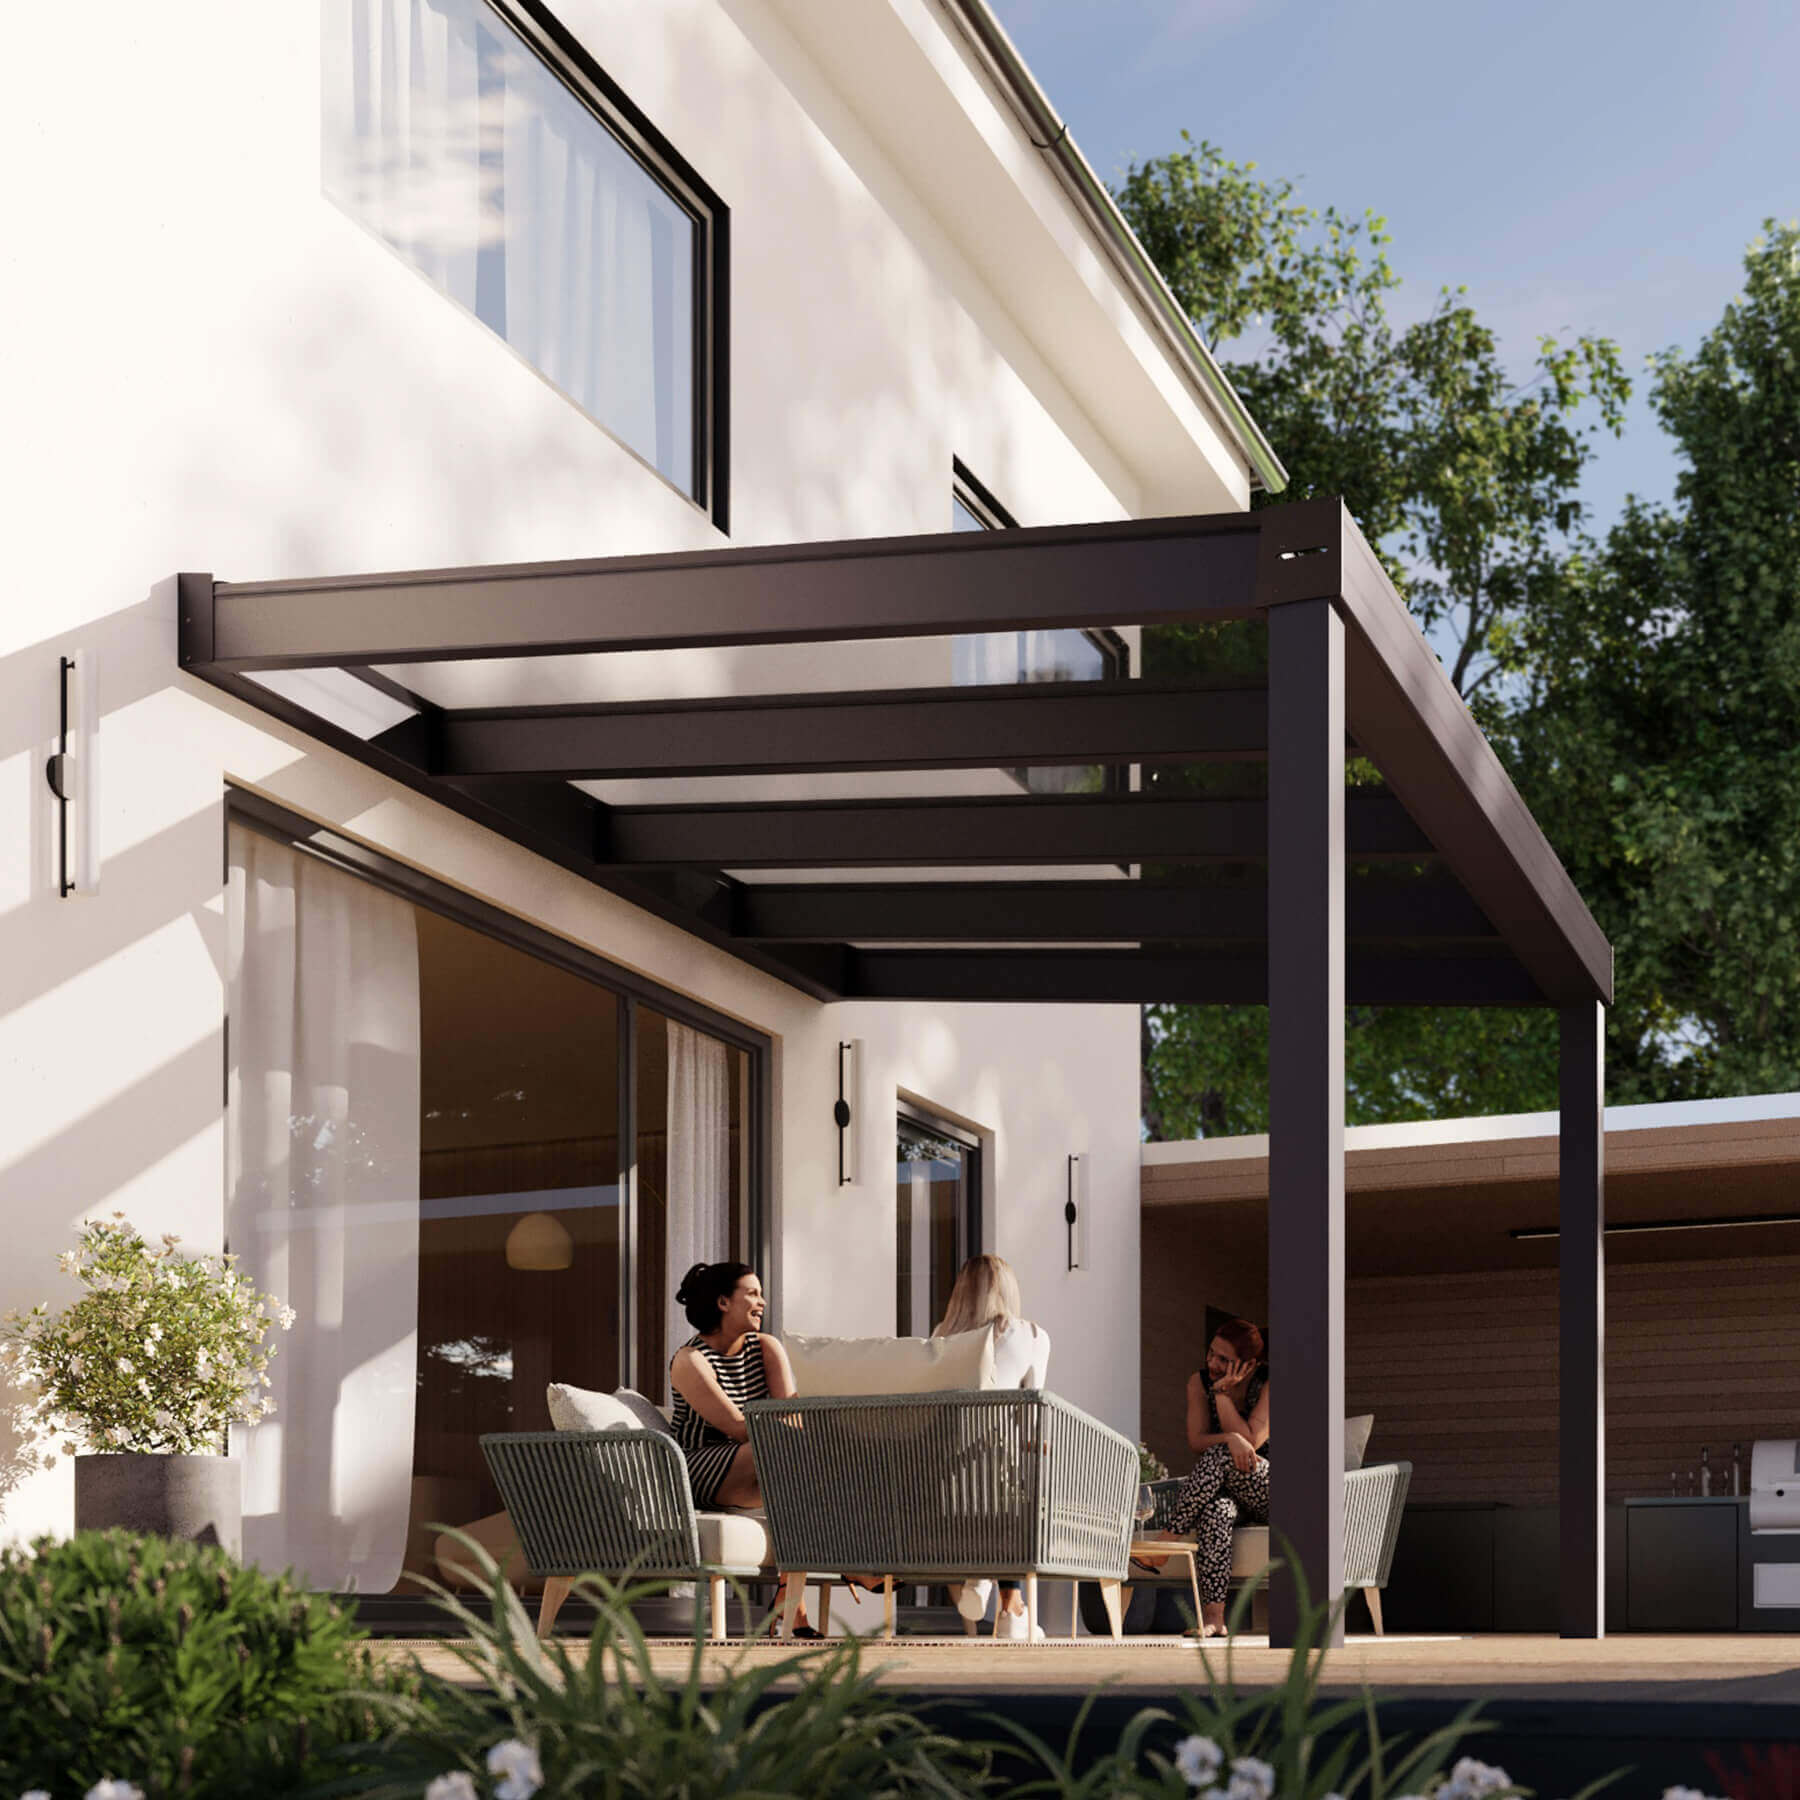  Terrassenüberdachung in drei Standardmaßen verfügbar